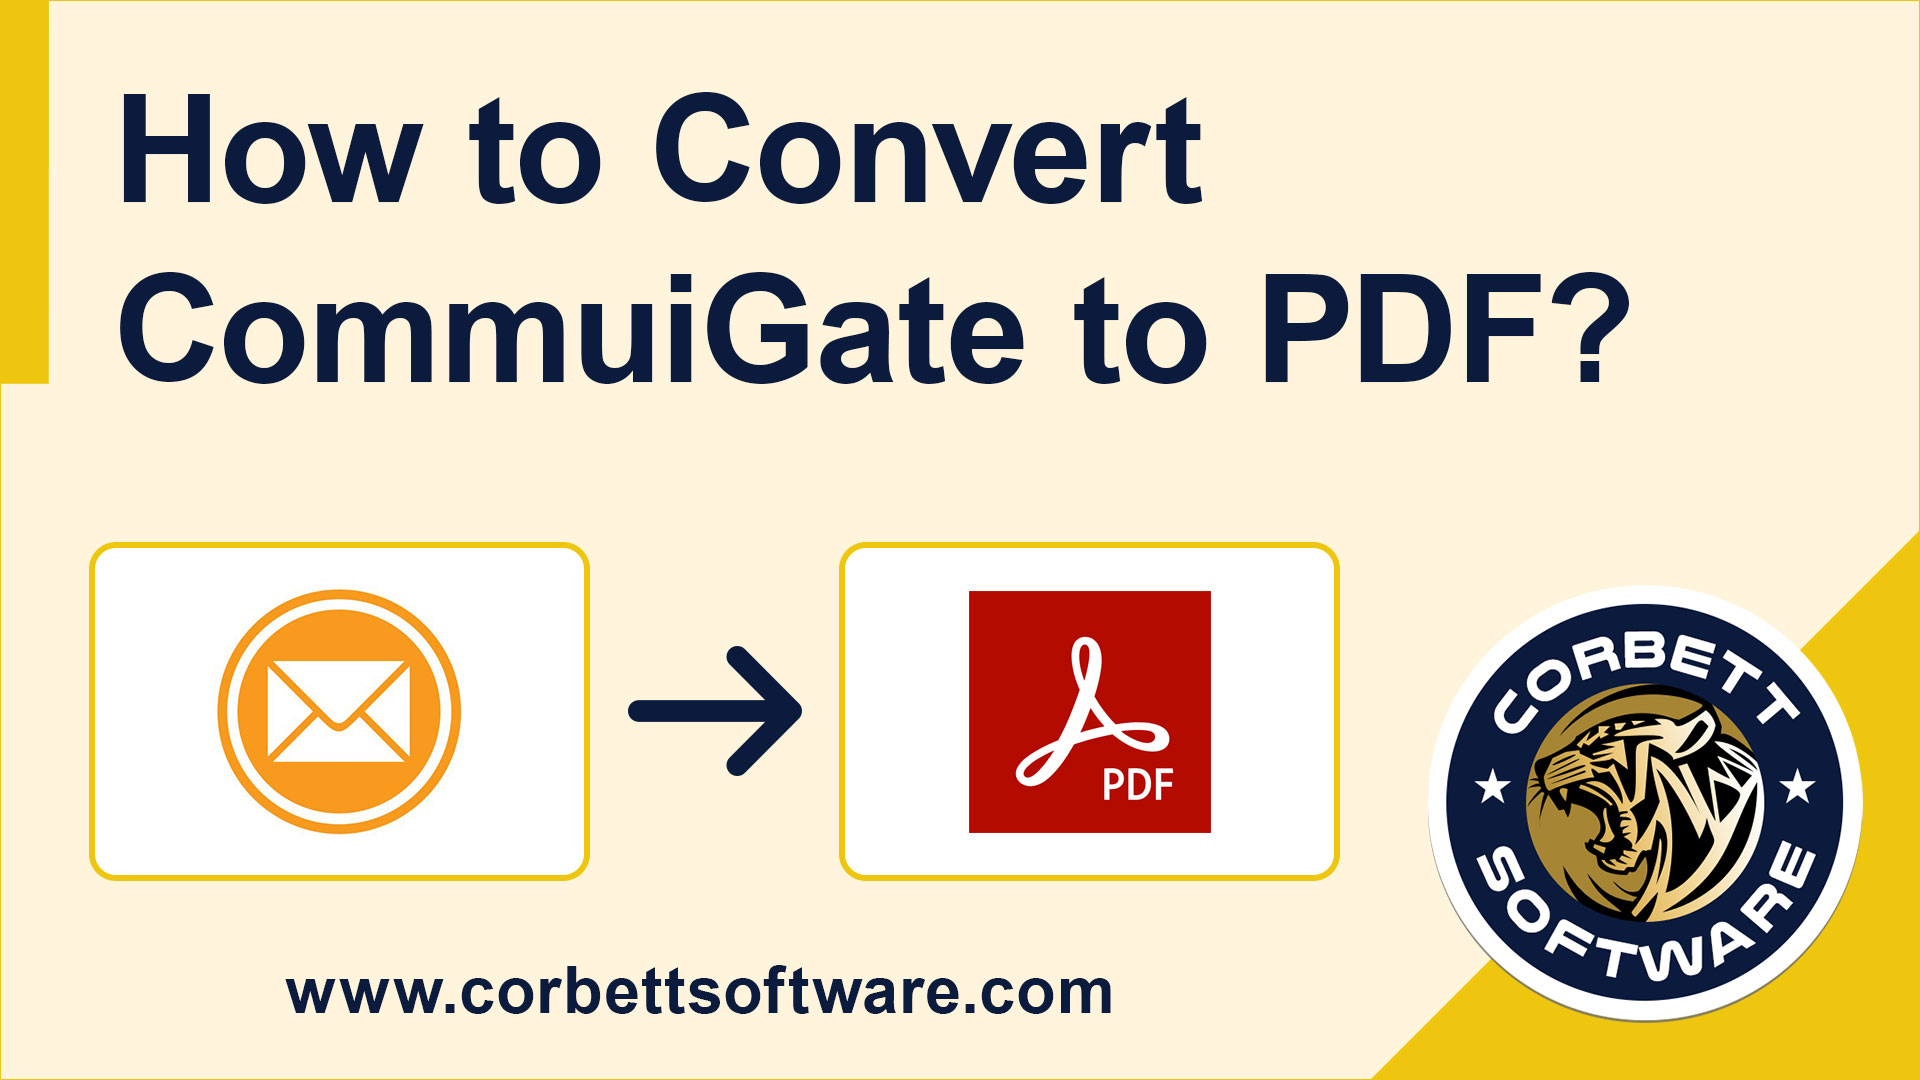 communigate to pdf converter